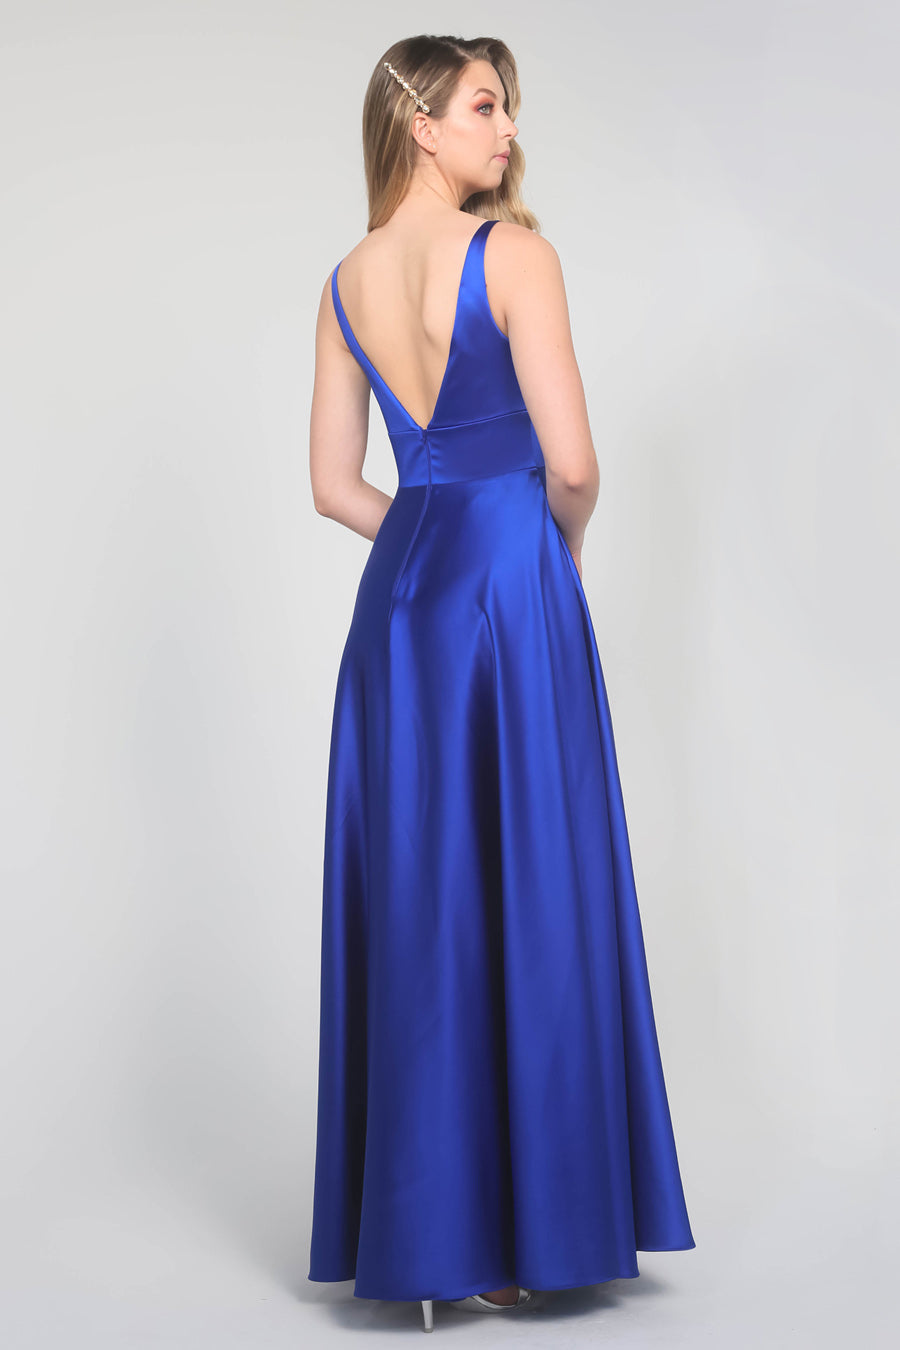 Tinaholy Couture Designer BA269 Royal Blue Satin Formal Dress Tina Holly Couture$ AfterPay Humm ZipPay LayBuy Sezzle